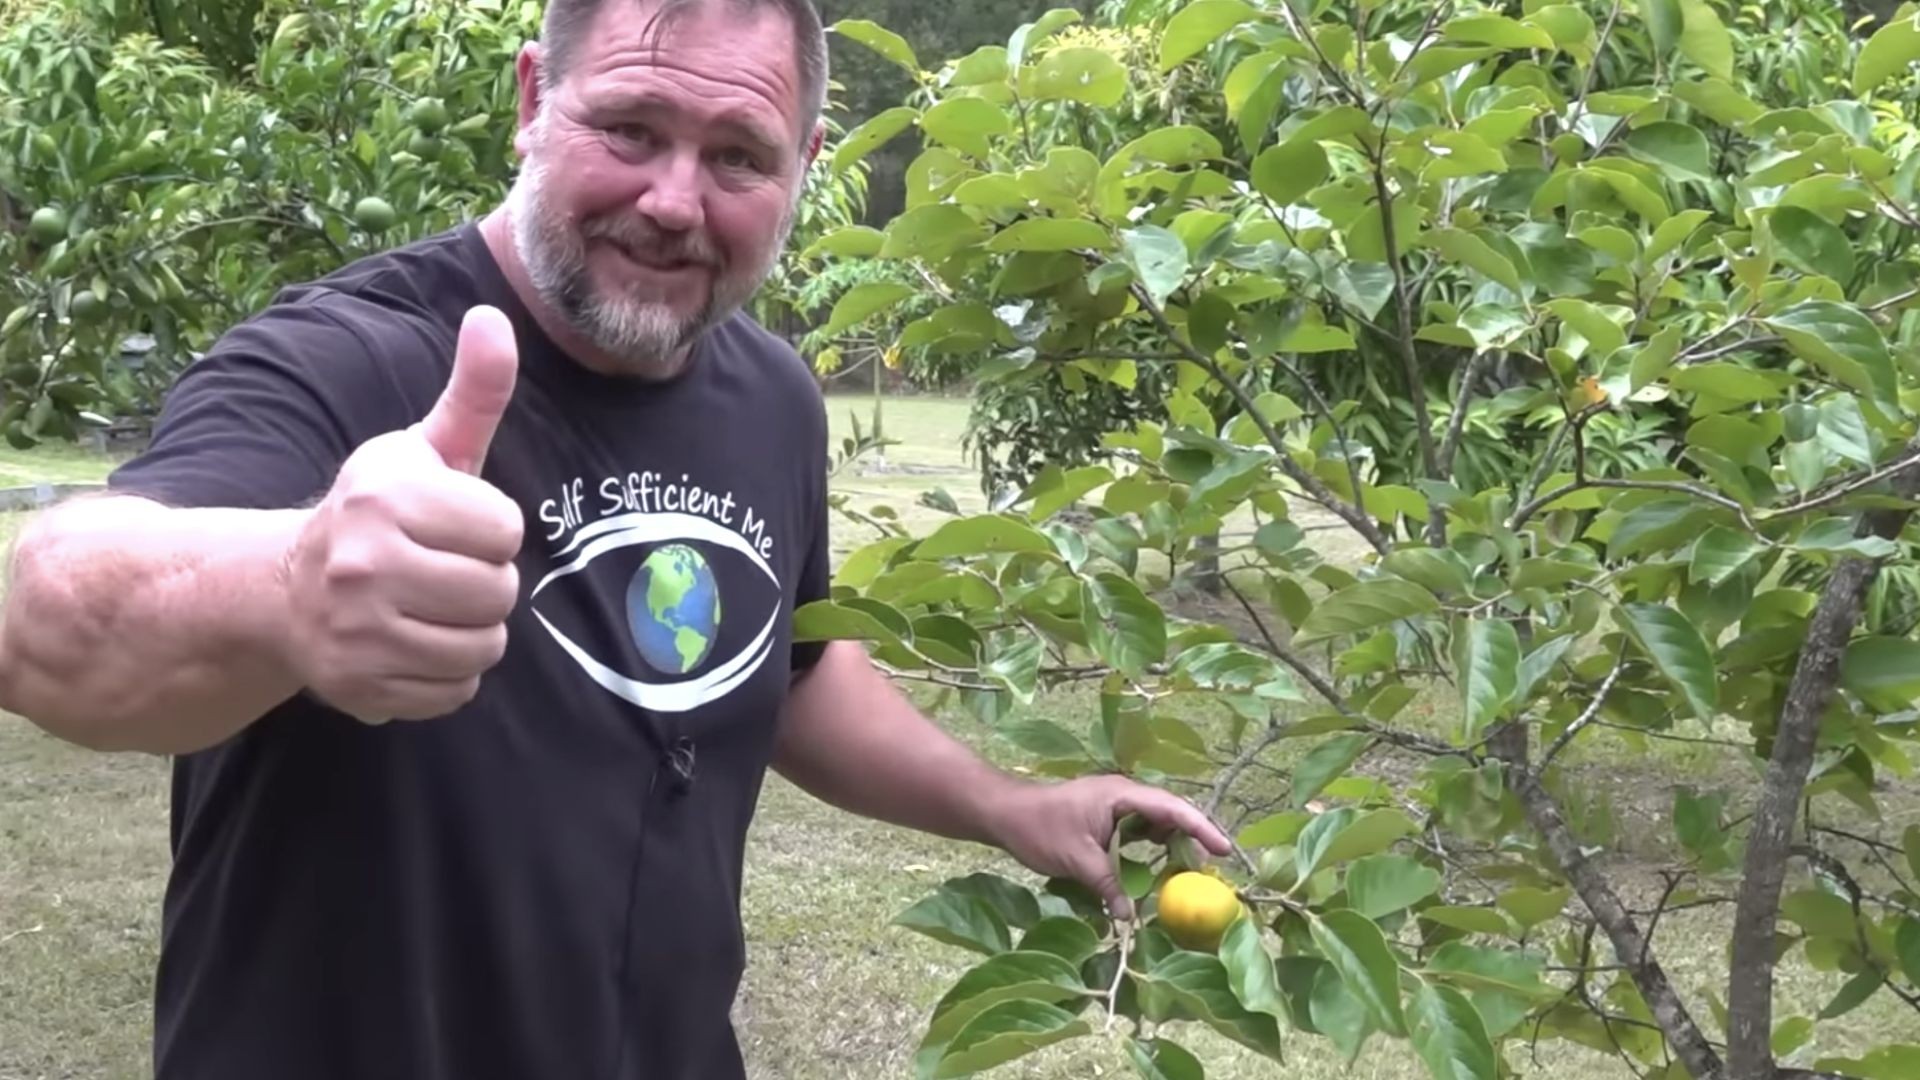 "10 Organic Ways to Control Pests in the Garden" (Mark's link below)